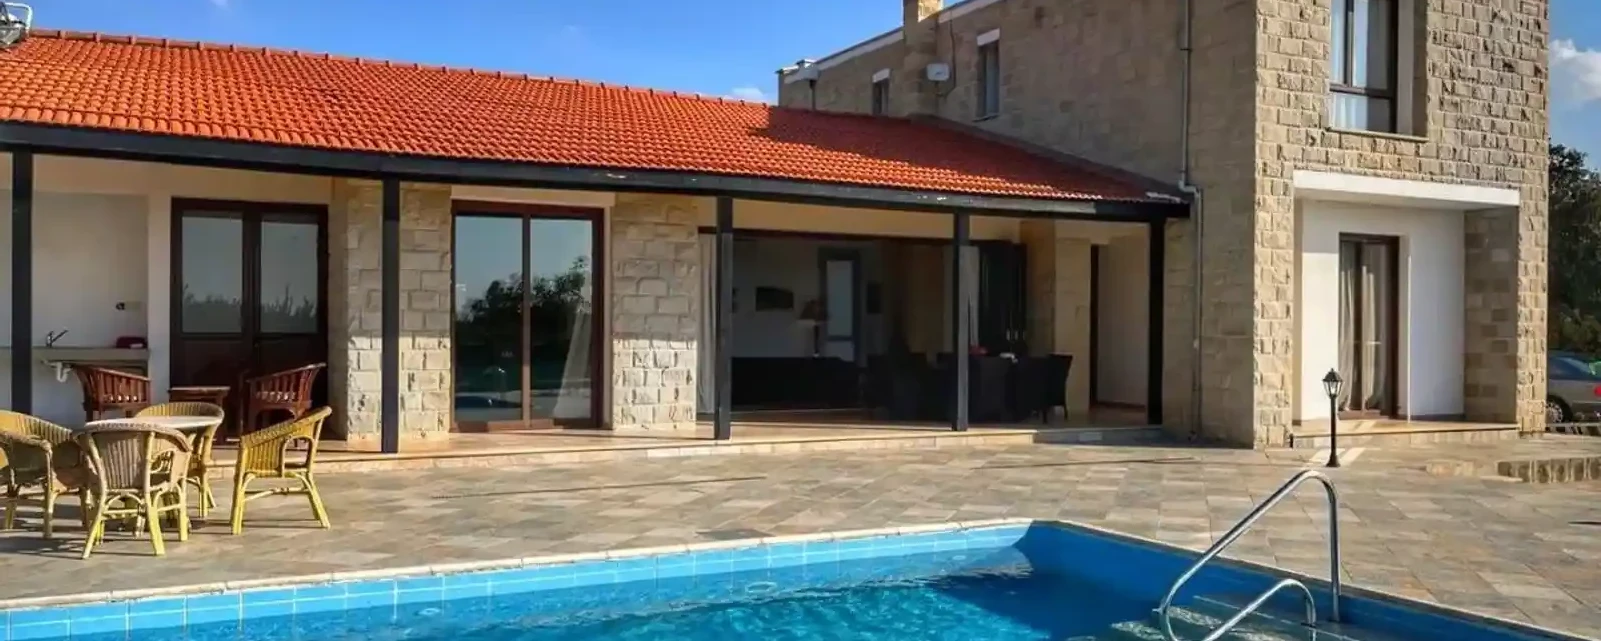 3-bedroom villa fоr sаle €700.000, image 1